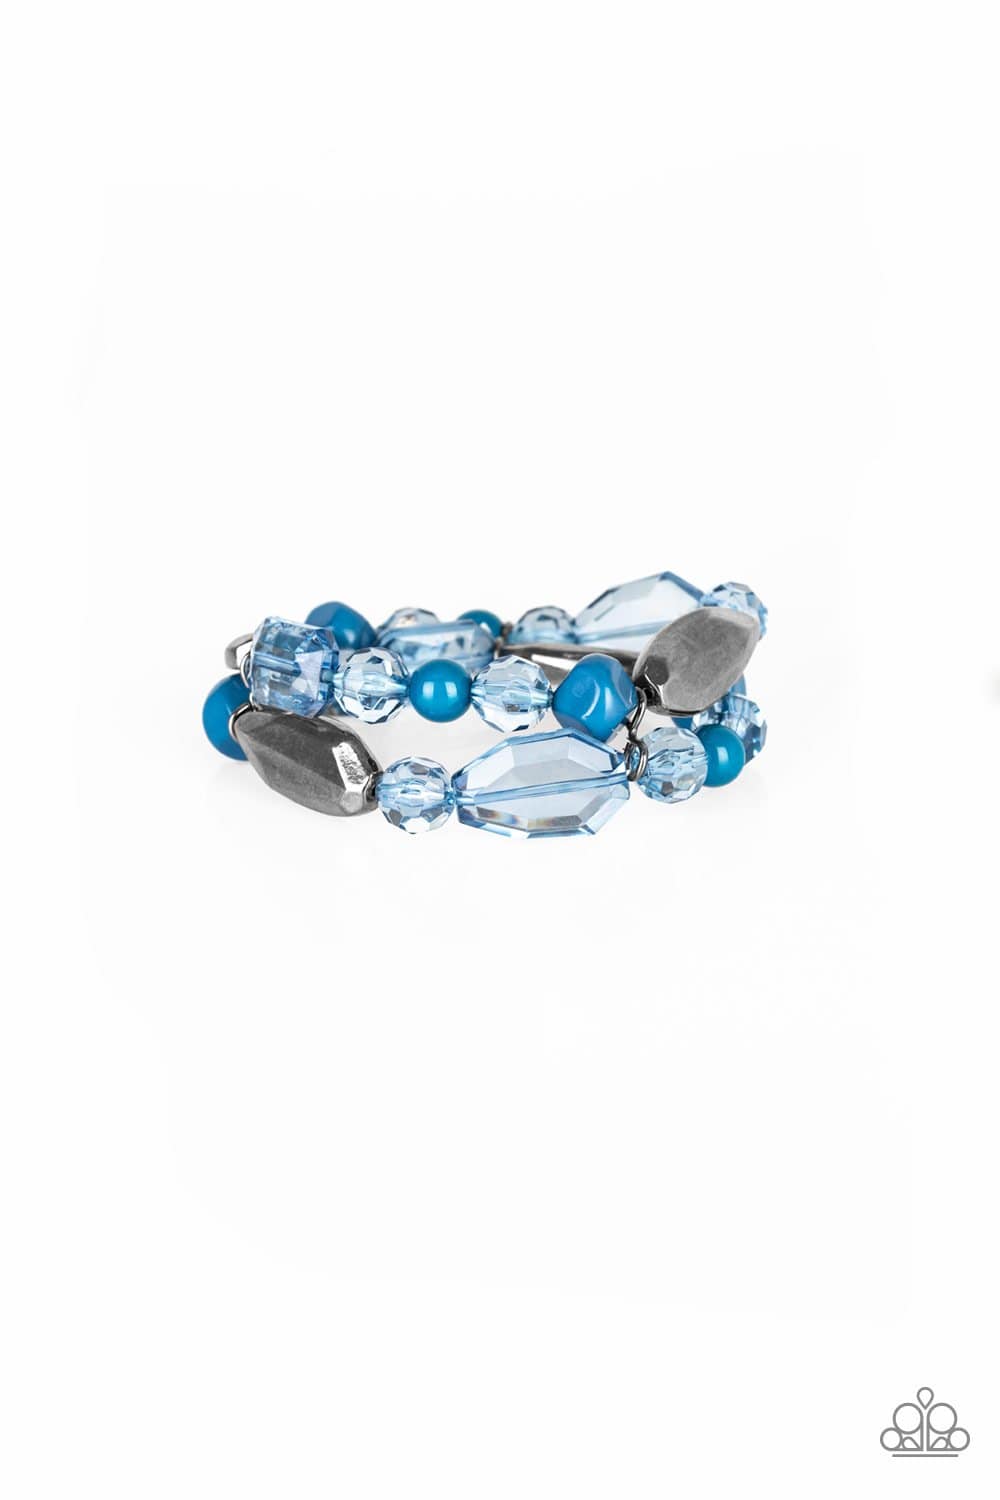 Rockin Rock Candy - Blue - GlaMarous Titi Jewels